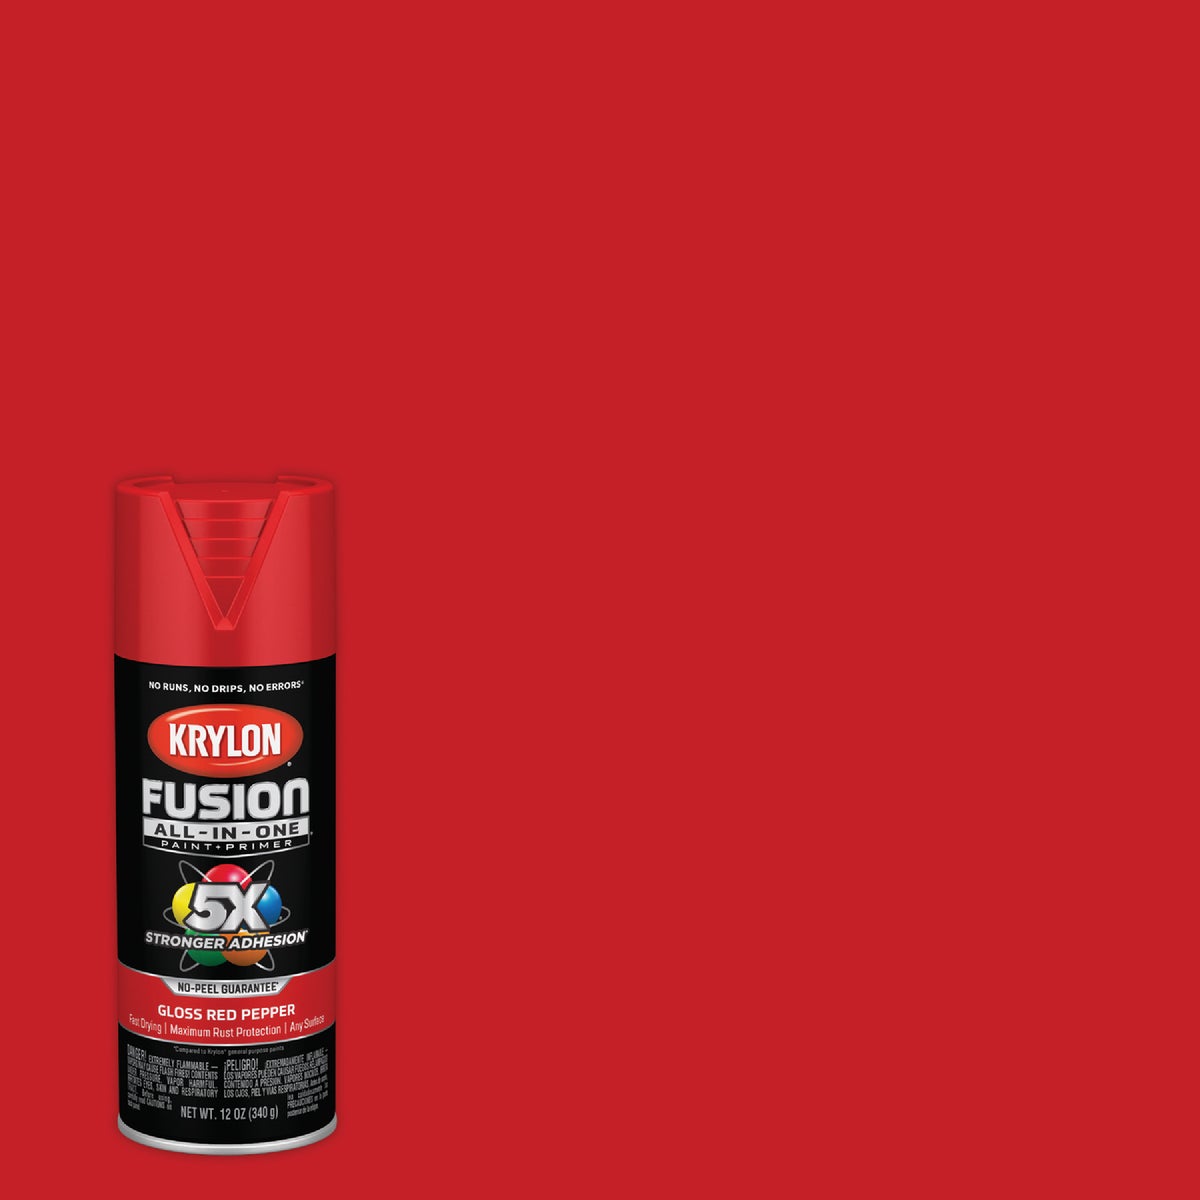 Fusion All-In-One Krylon K02720007 Krylon Fusion All-In-One Gloss Spray Paint & Primer, Red Pepper K02720007